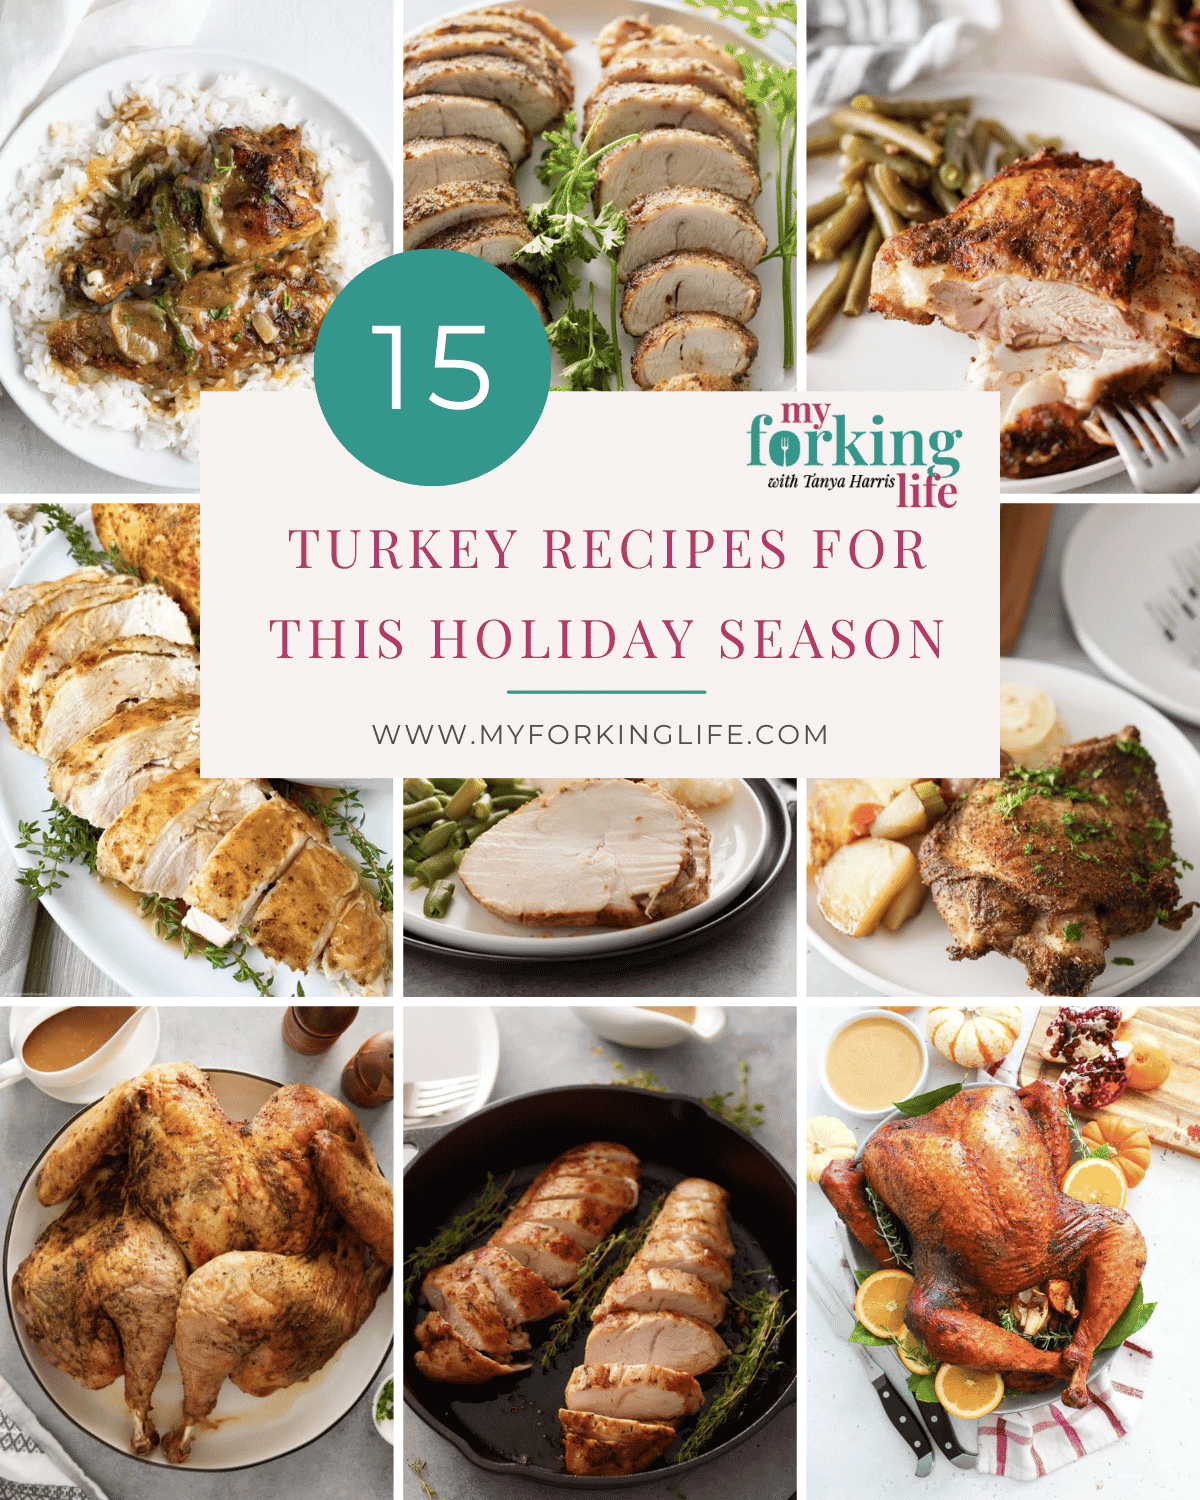 15 turkey recipes for the holiday season graphic